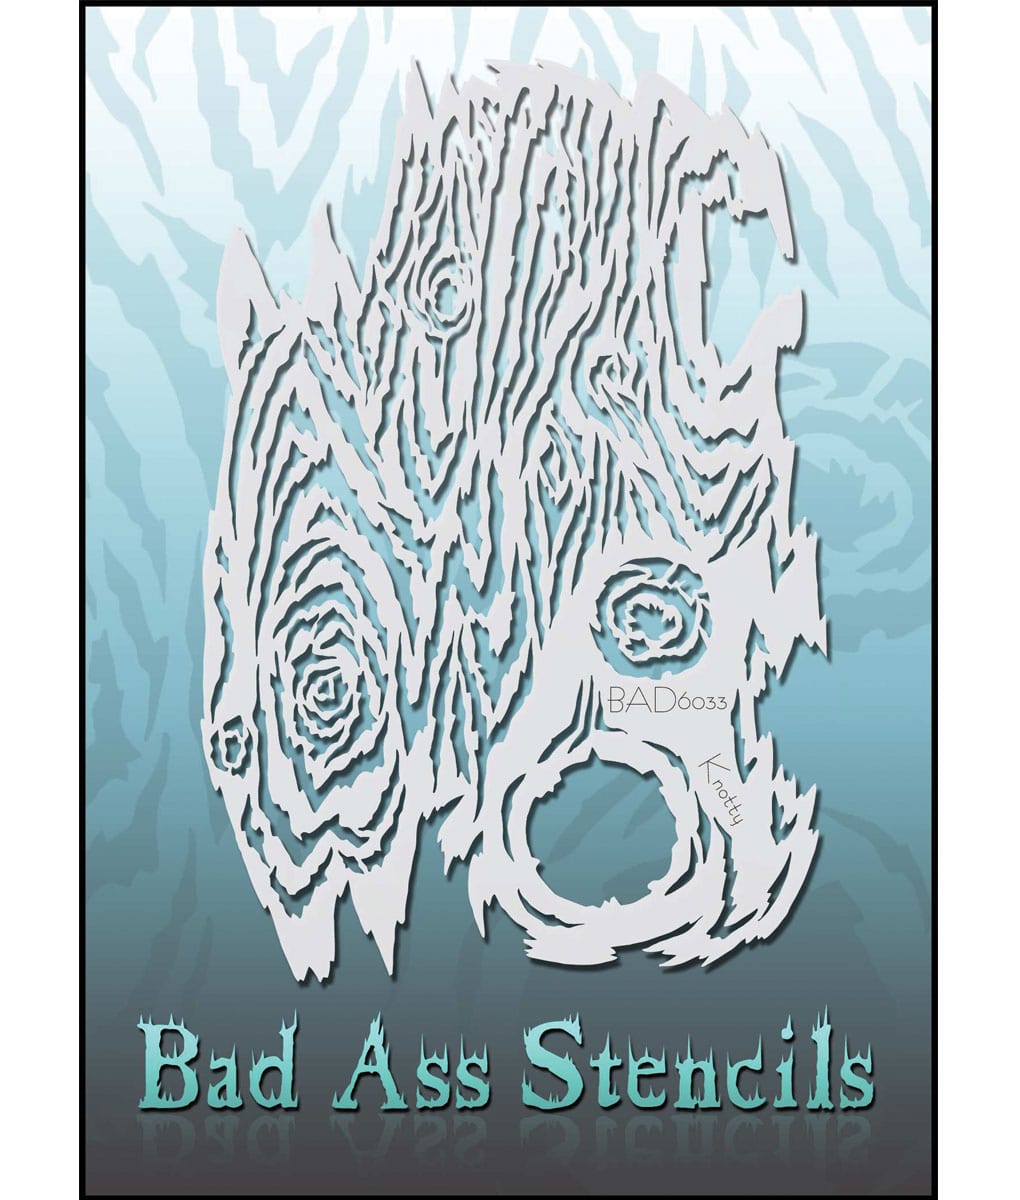 Bad Ass Stencils™ – Graftobian Make-Up Company